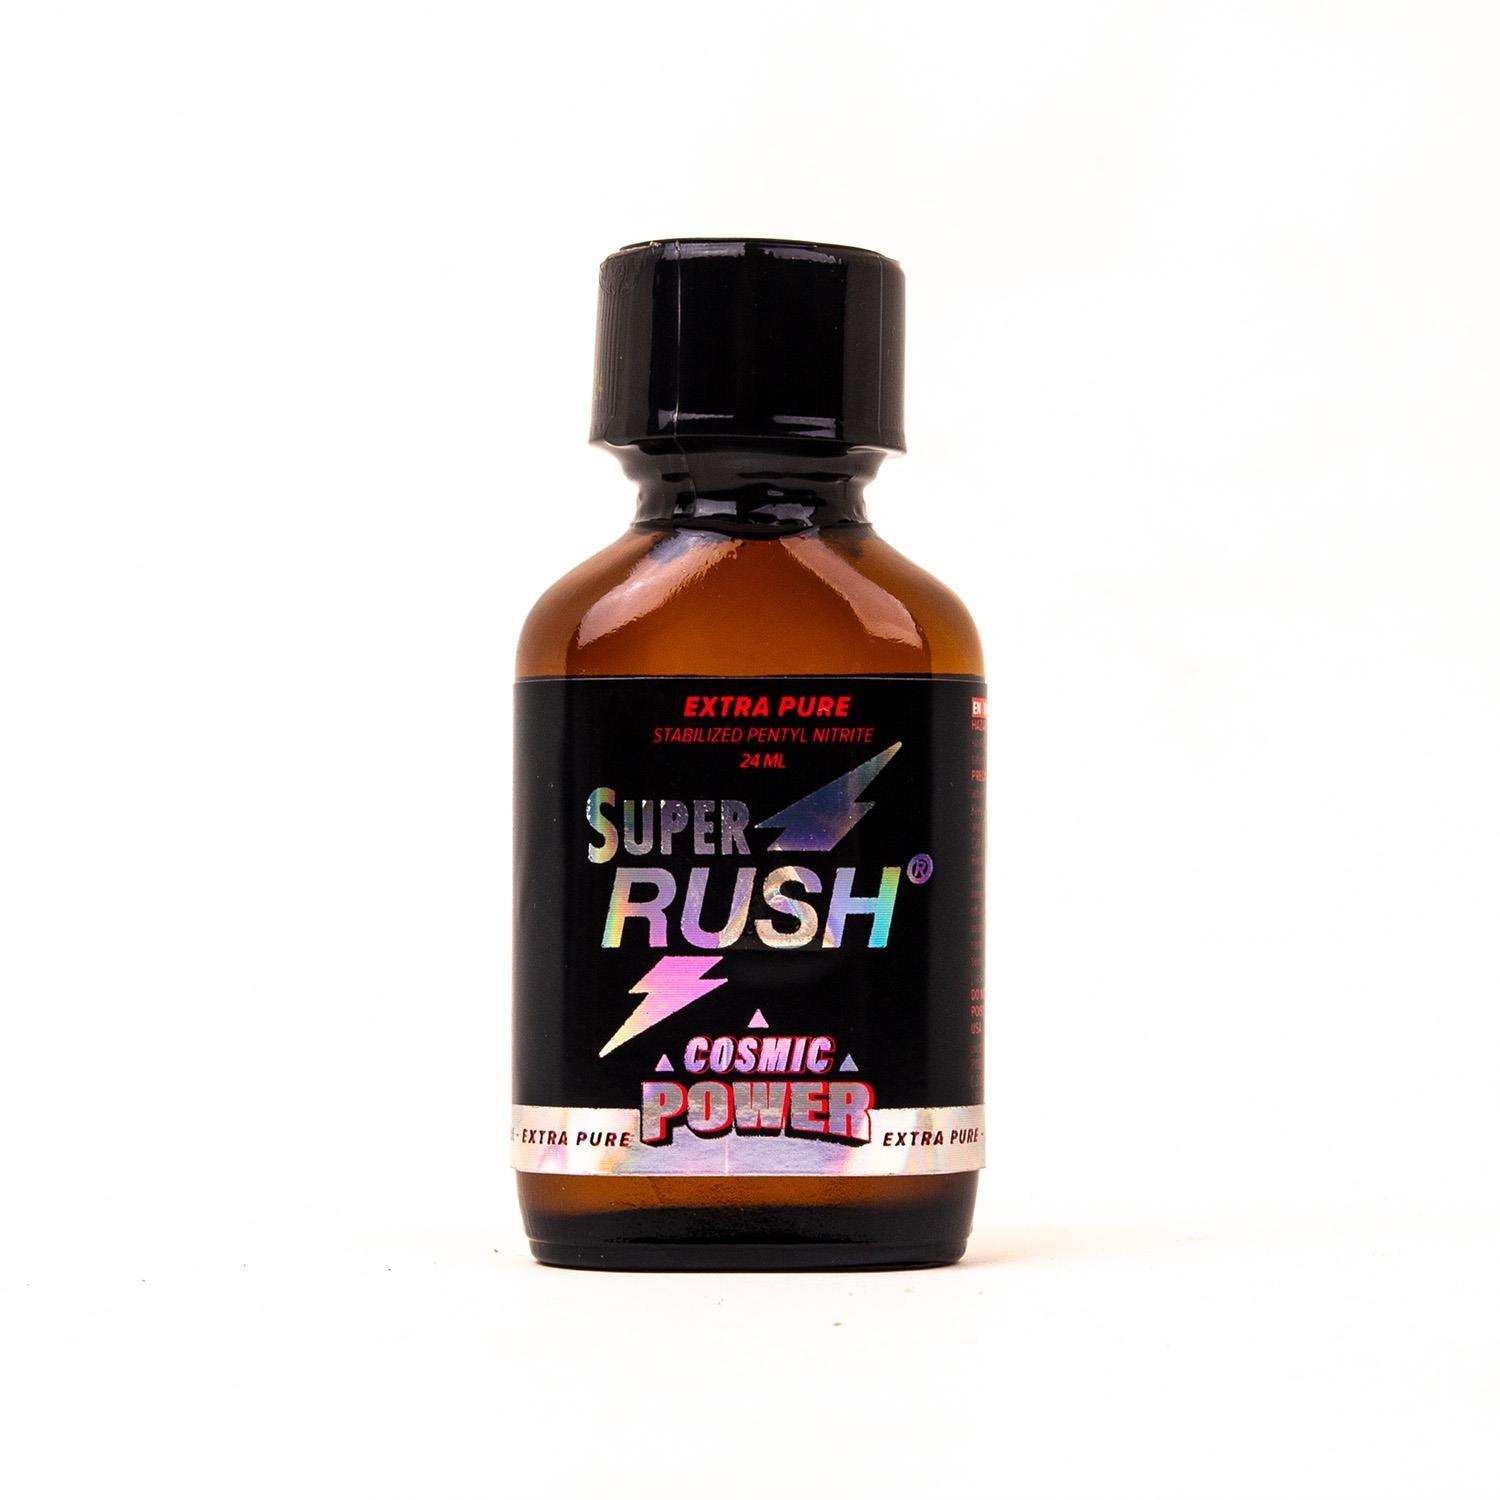 SUPER RUSH Black Label COSMIC POWER, 24m by Super Rush